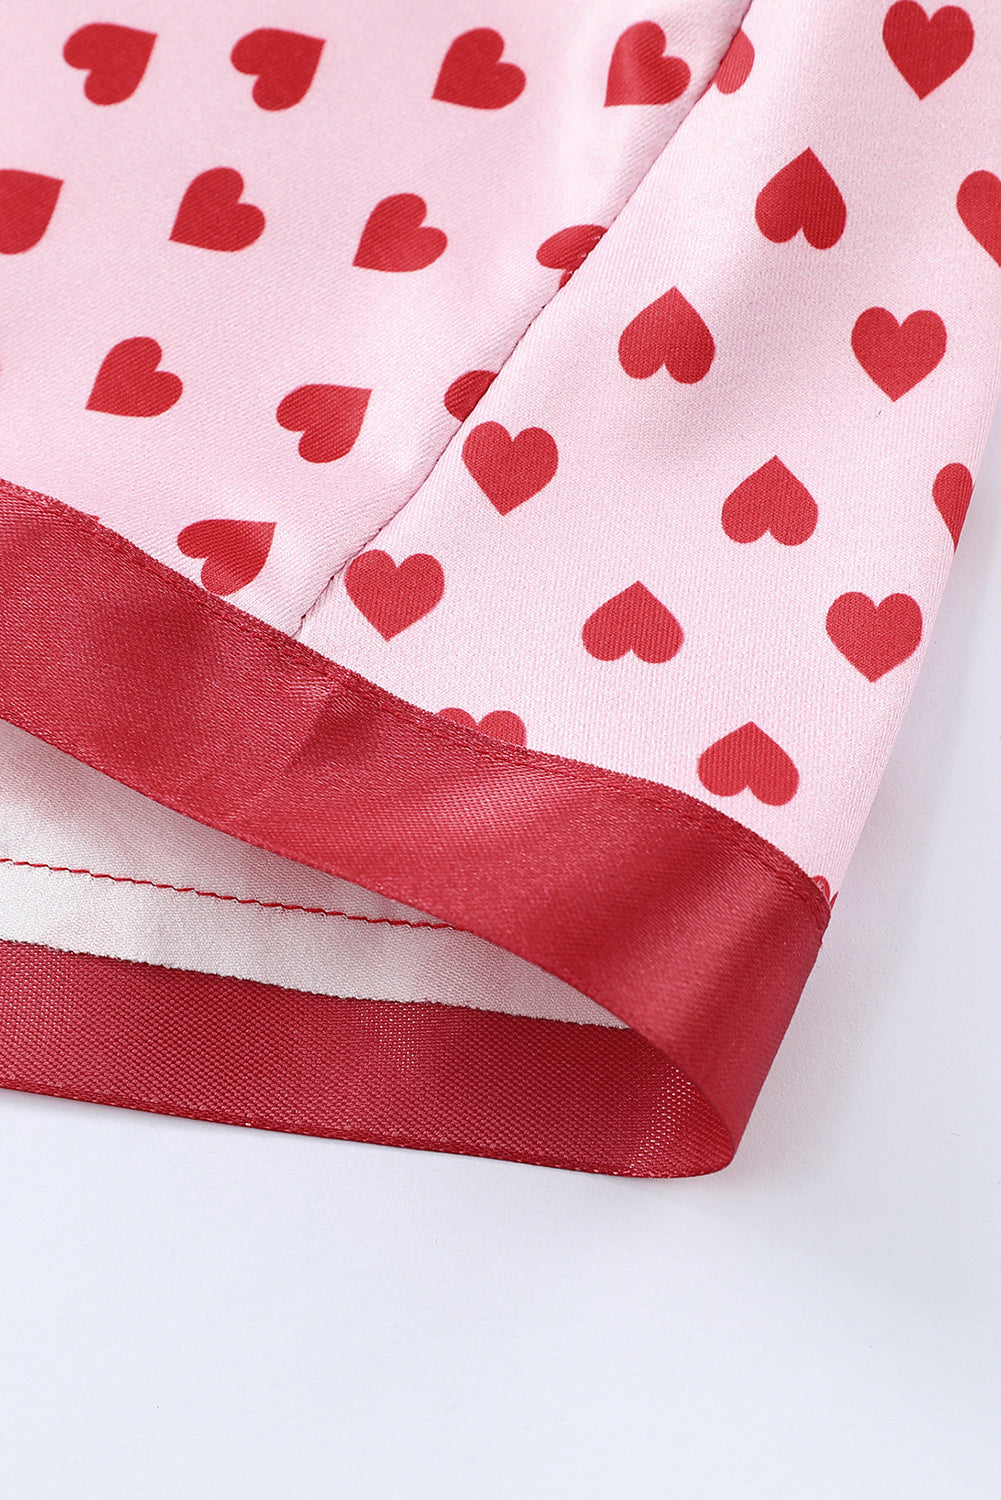 Red Heart Shape Print Lace Crochet Babydoll Set Babydolls & Chemises JT's Designer Fashion